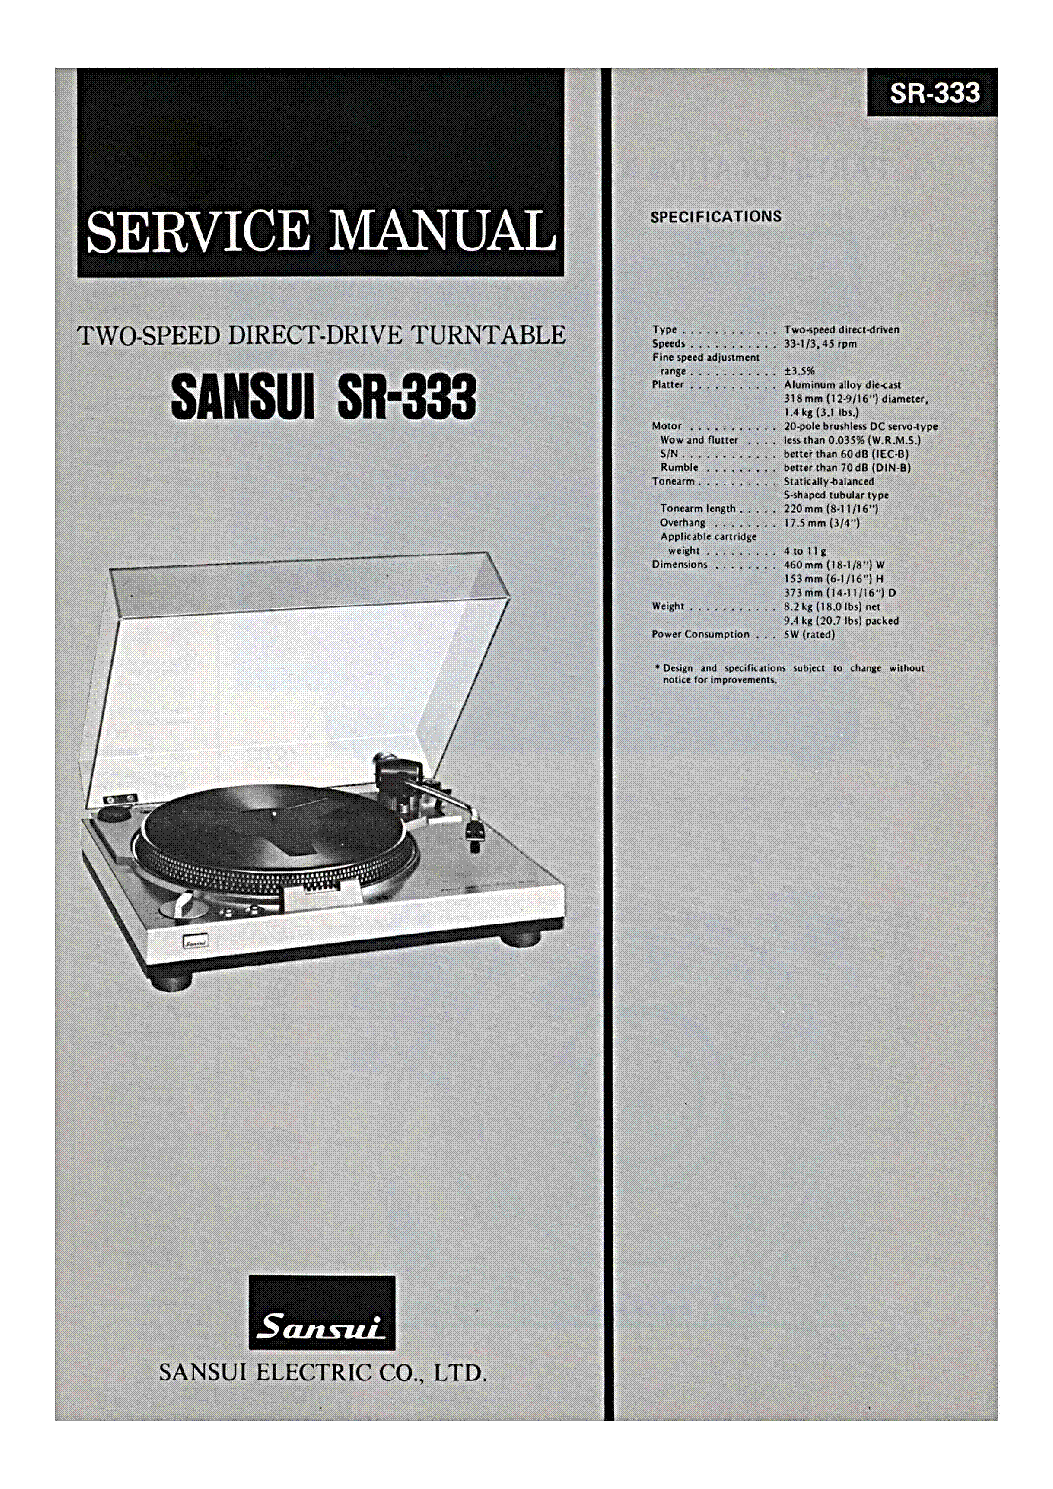 Sansui Manuals Free